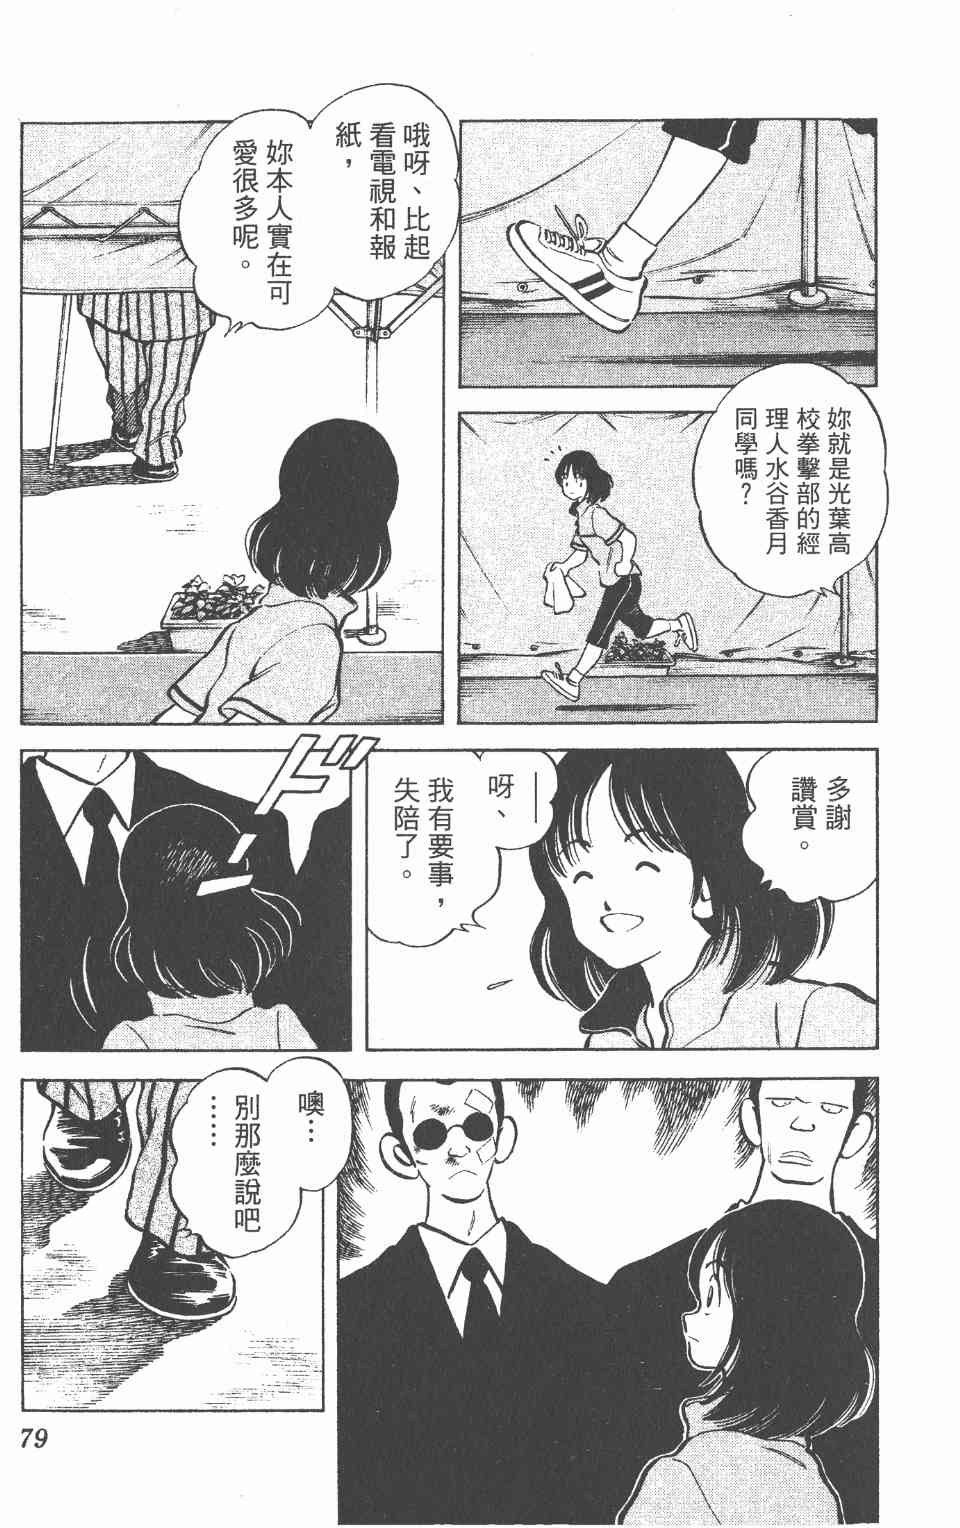 《Katsu!》漫画 青春交叉点12卷